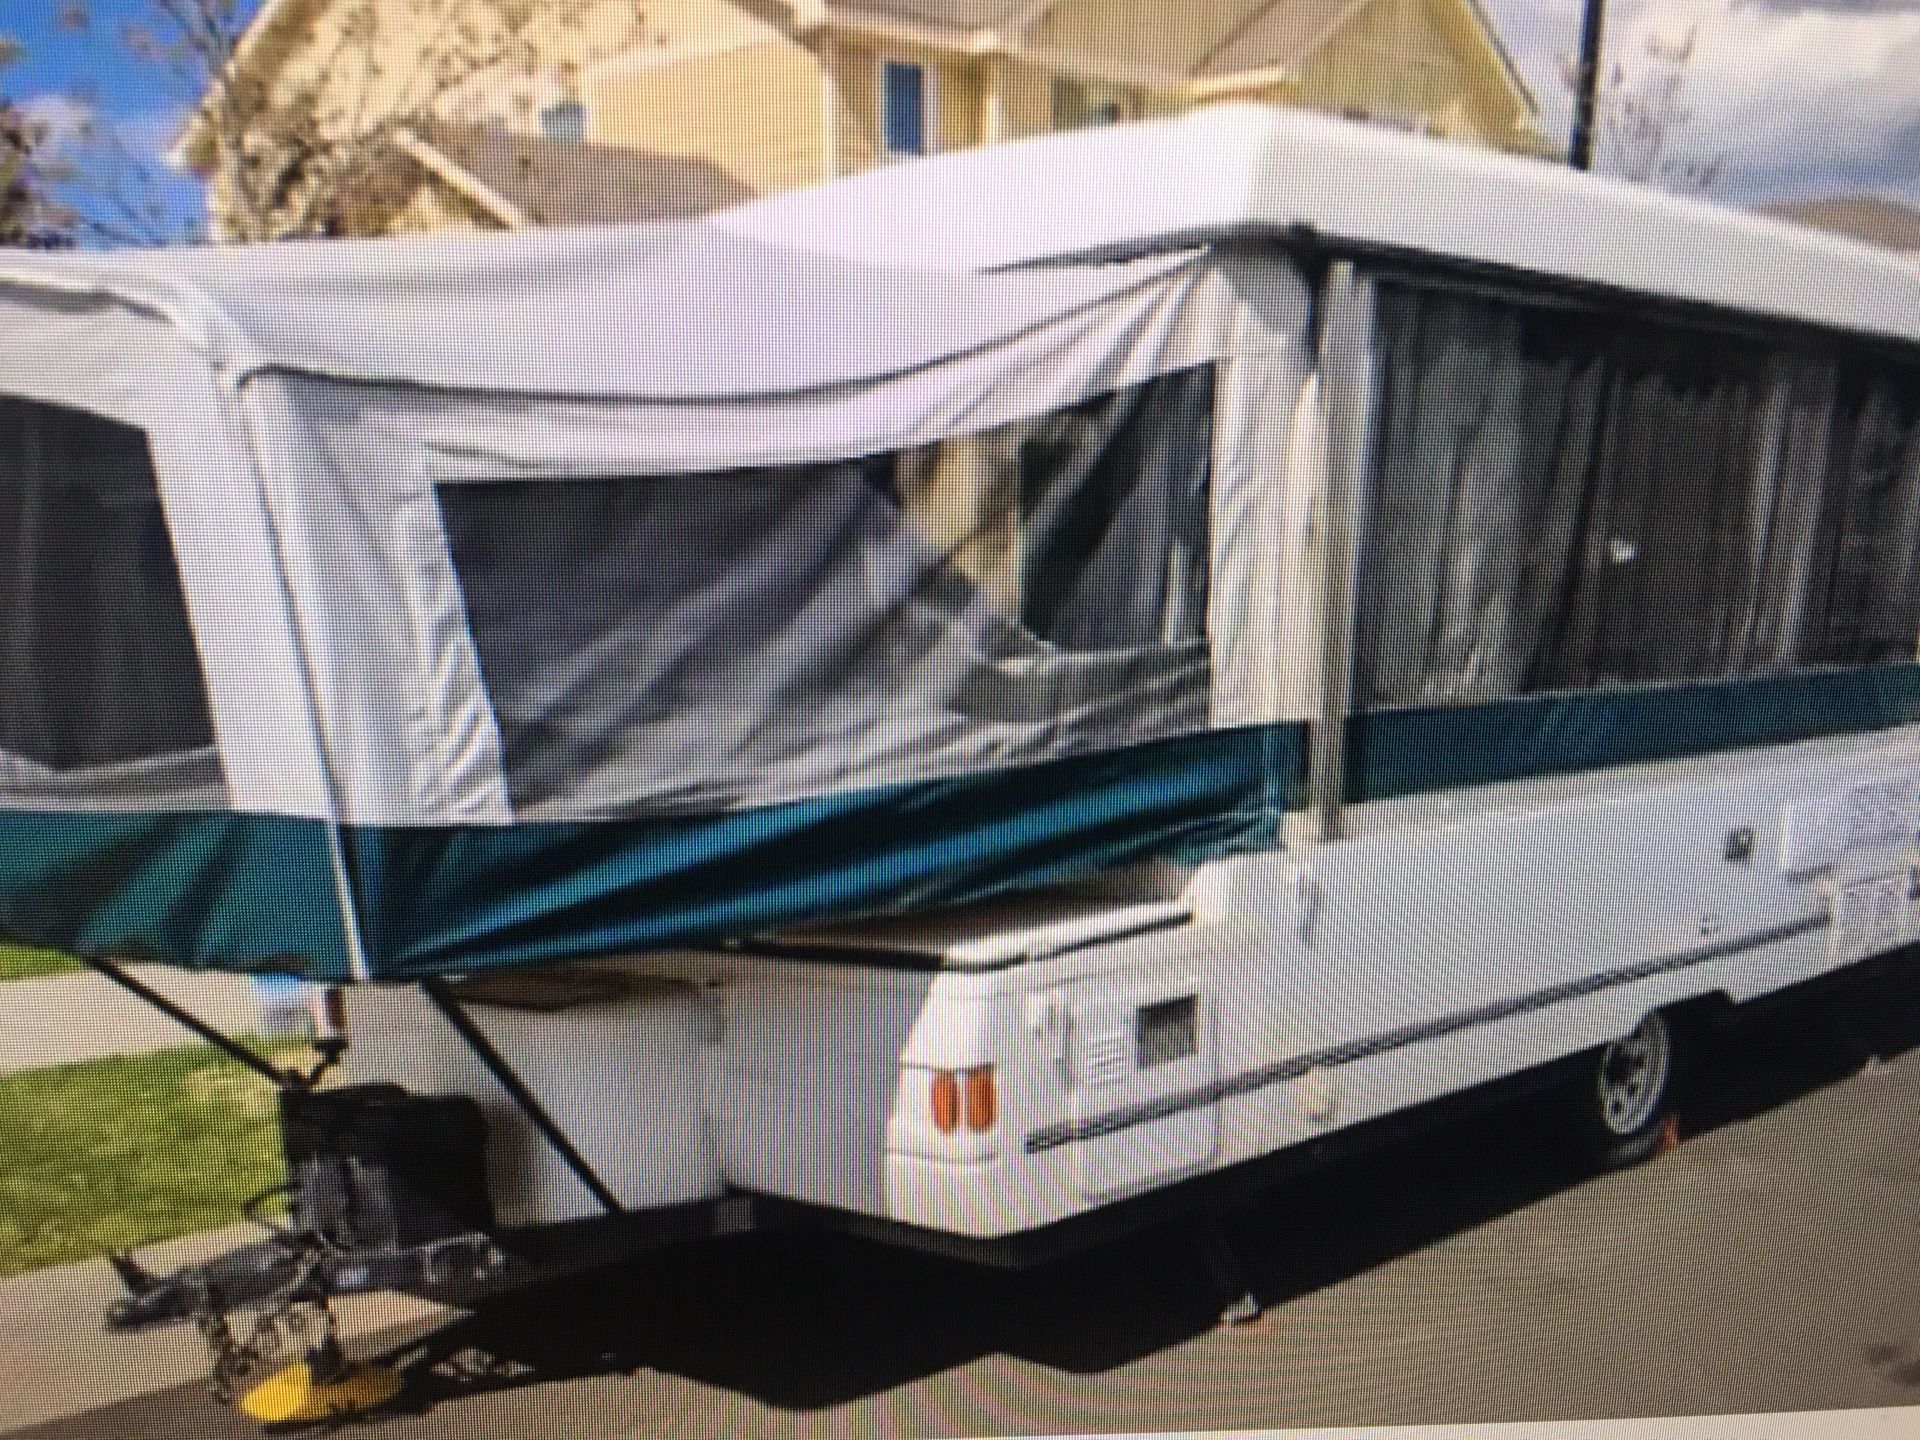 Camper trailer Rv pop up